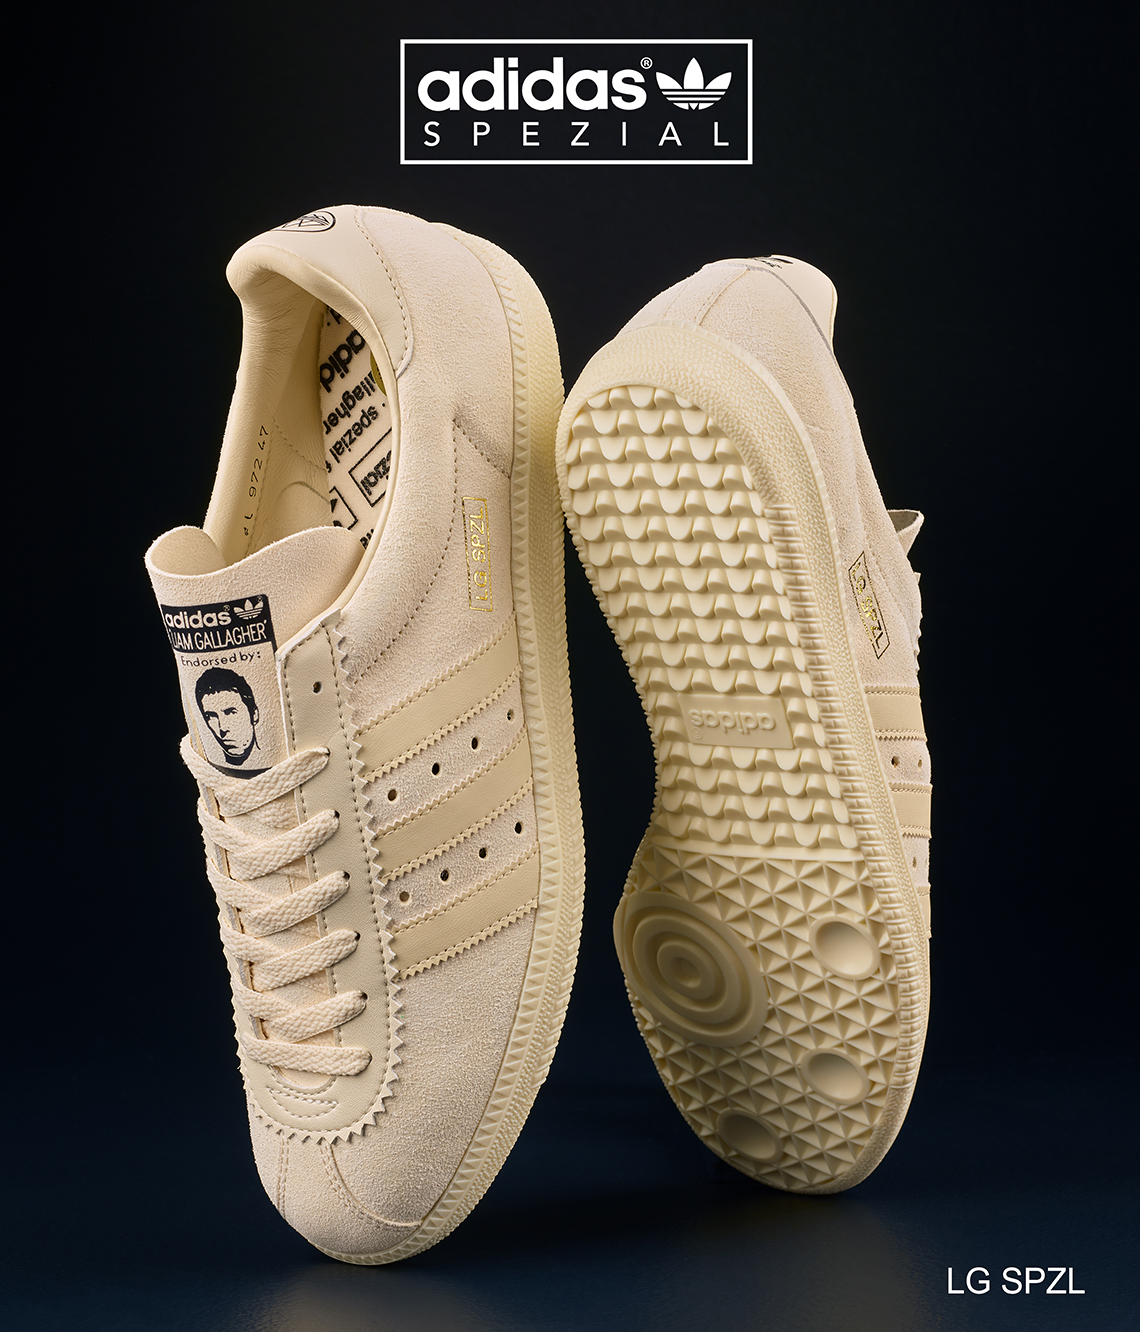 adidas Spezial Liam Gallagher LG SPZL Release Date | SneakerNews.com